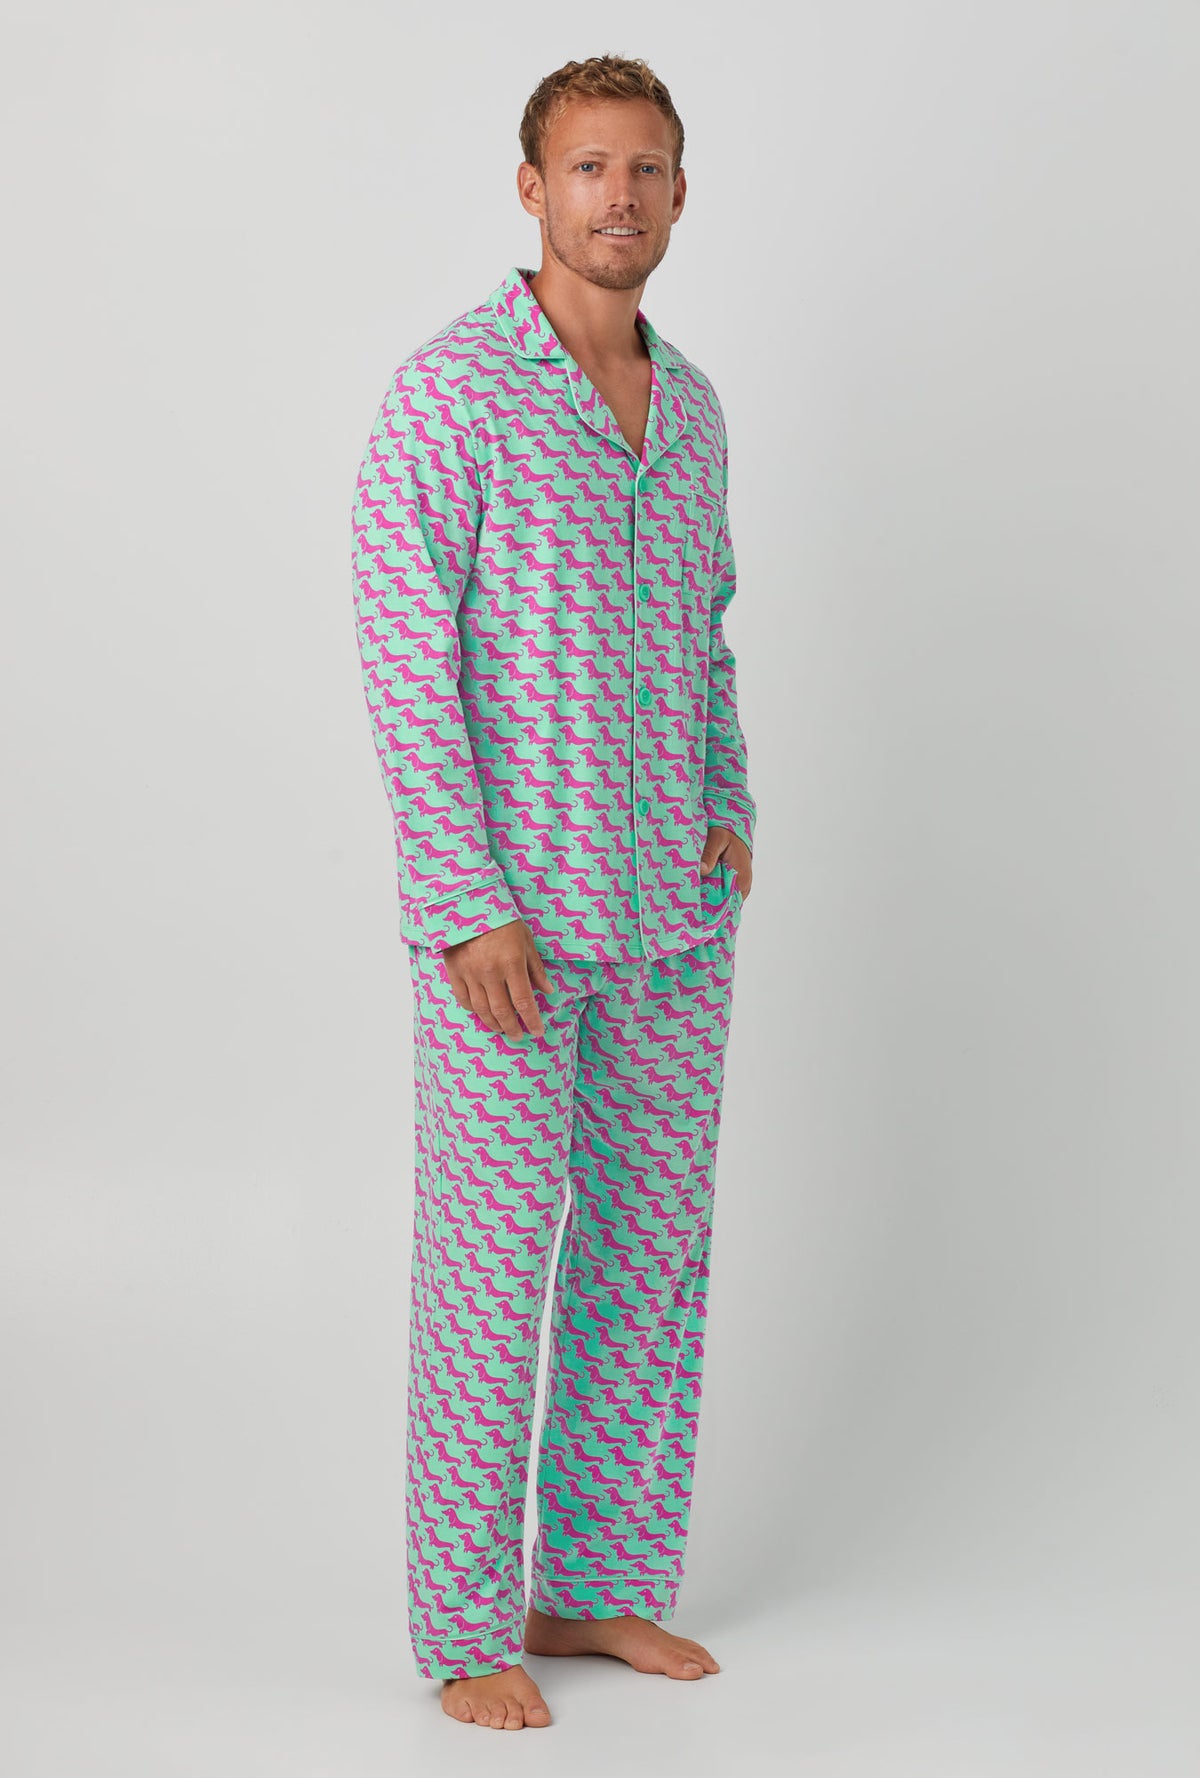 A men wearing  Long Sleeve Classic Stretch Jersey PJ Set with Dog Walk print